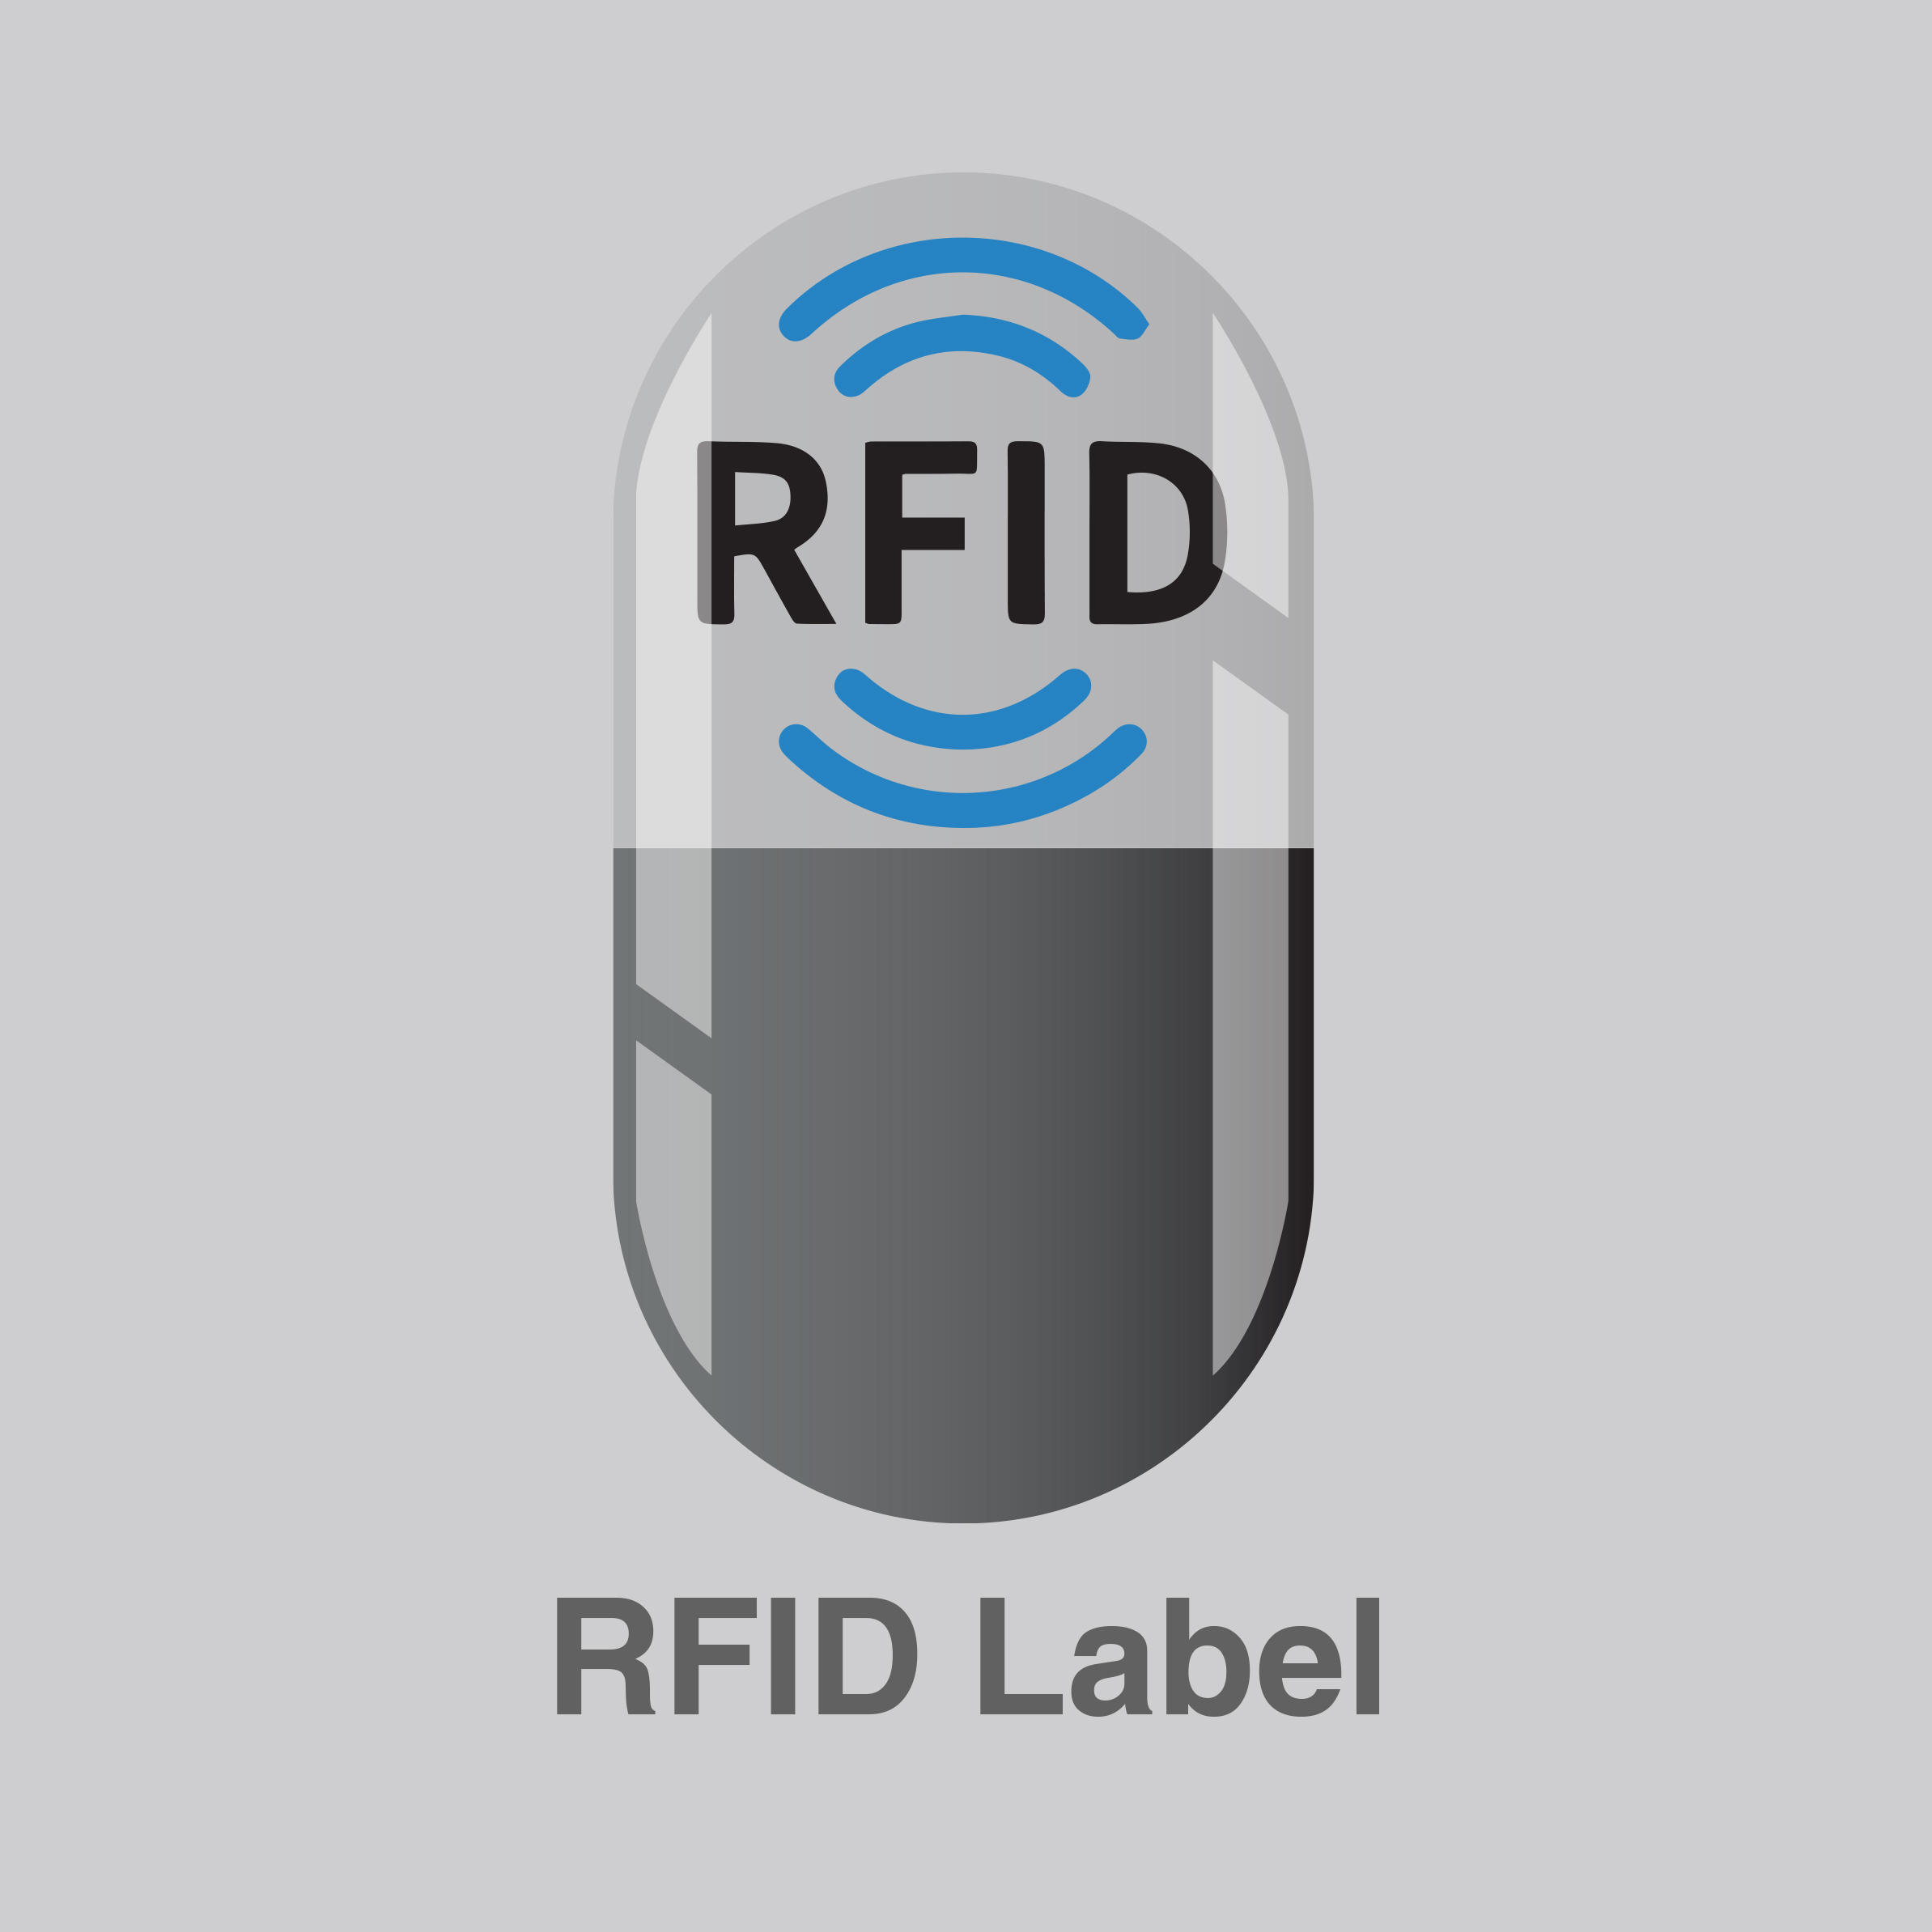 Rfid label